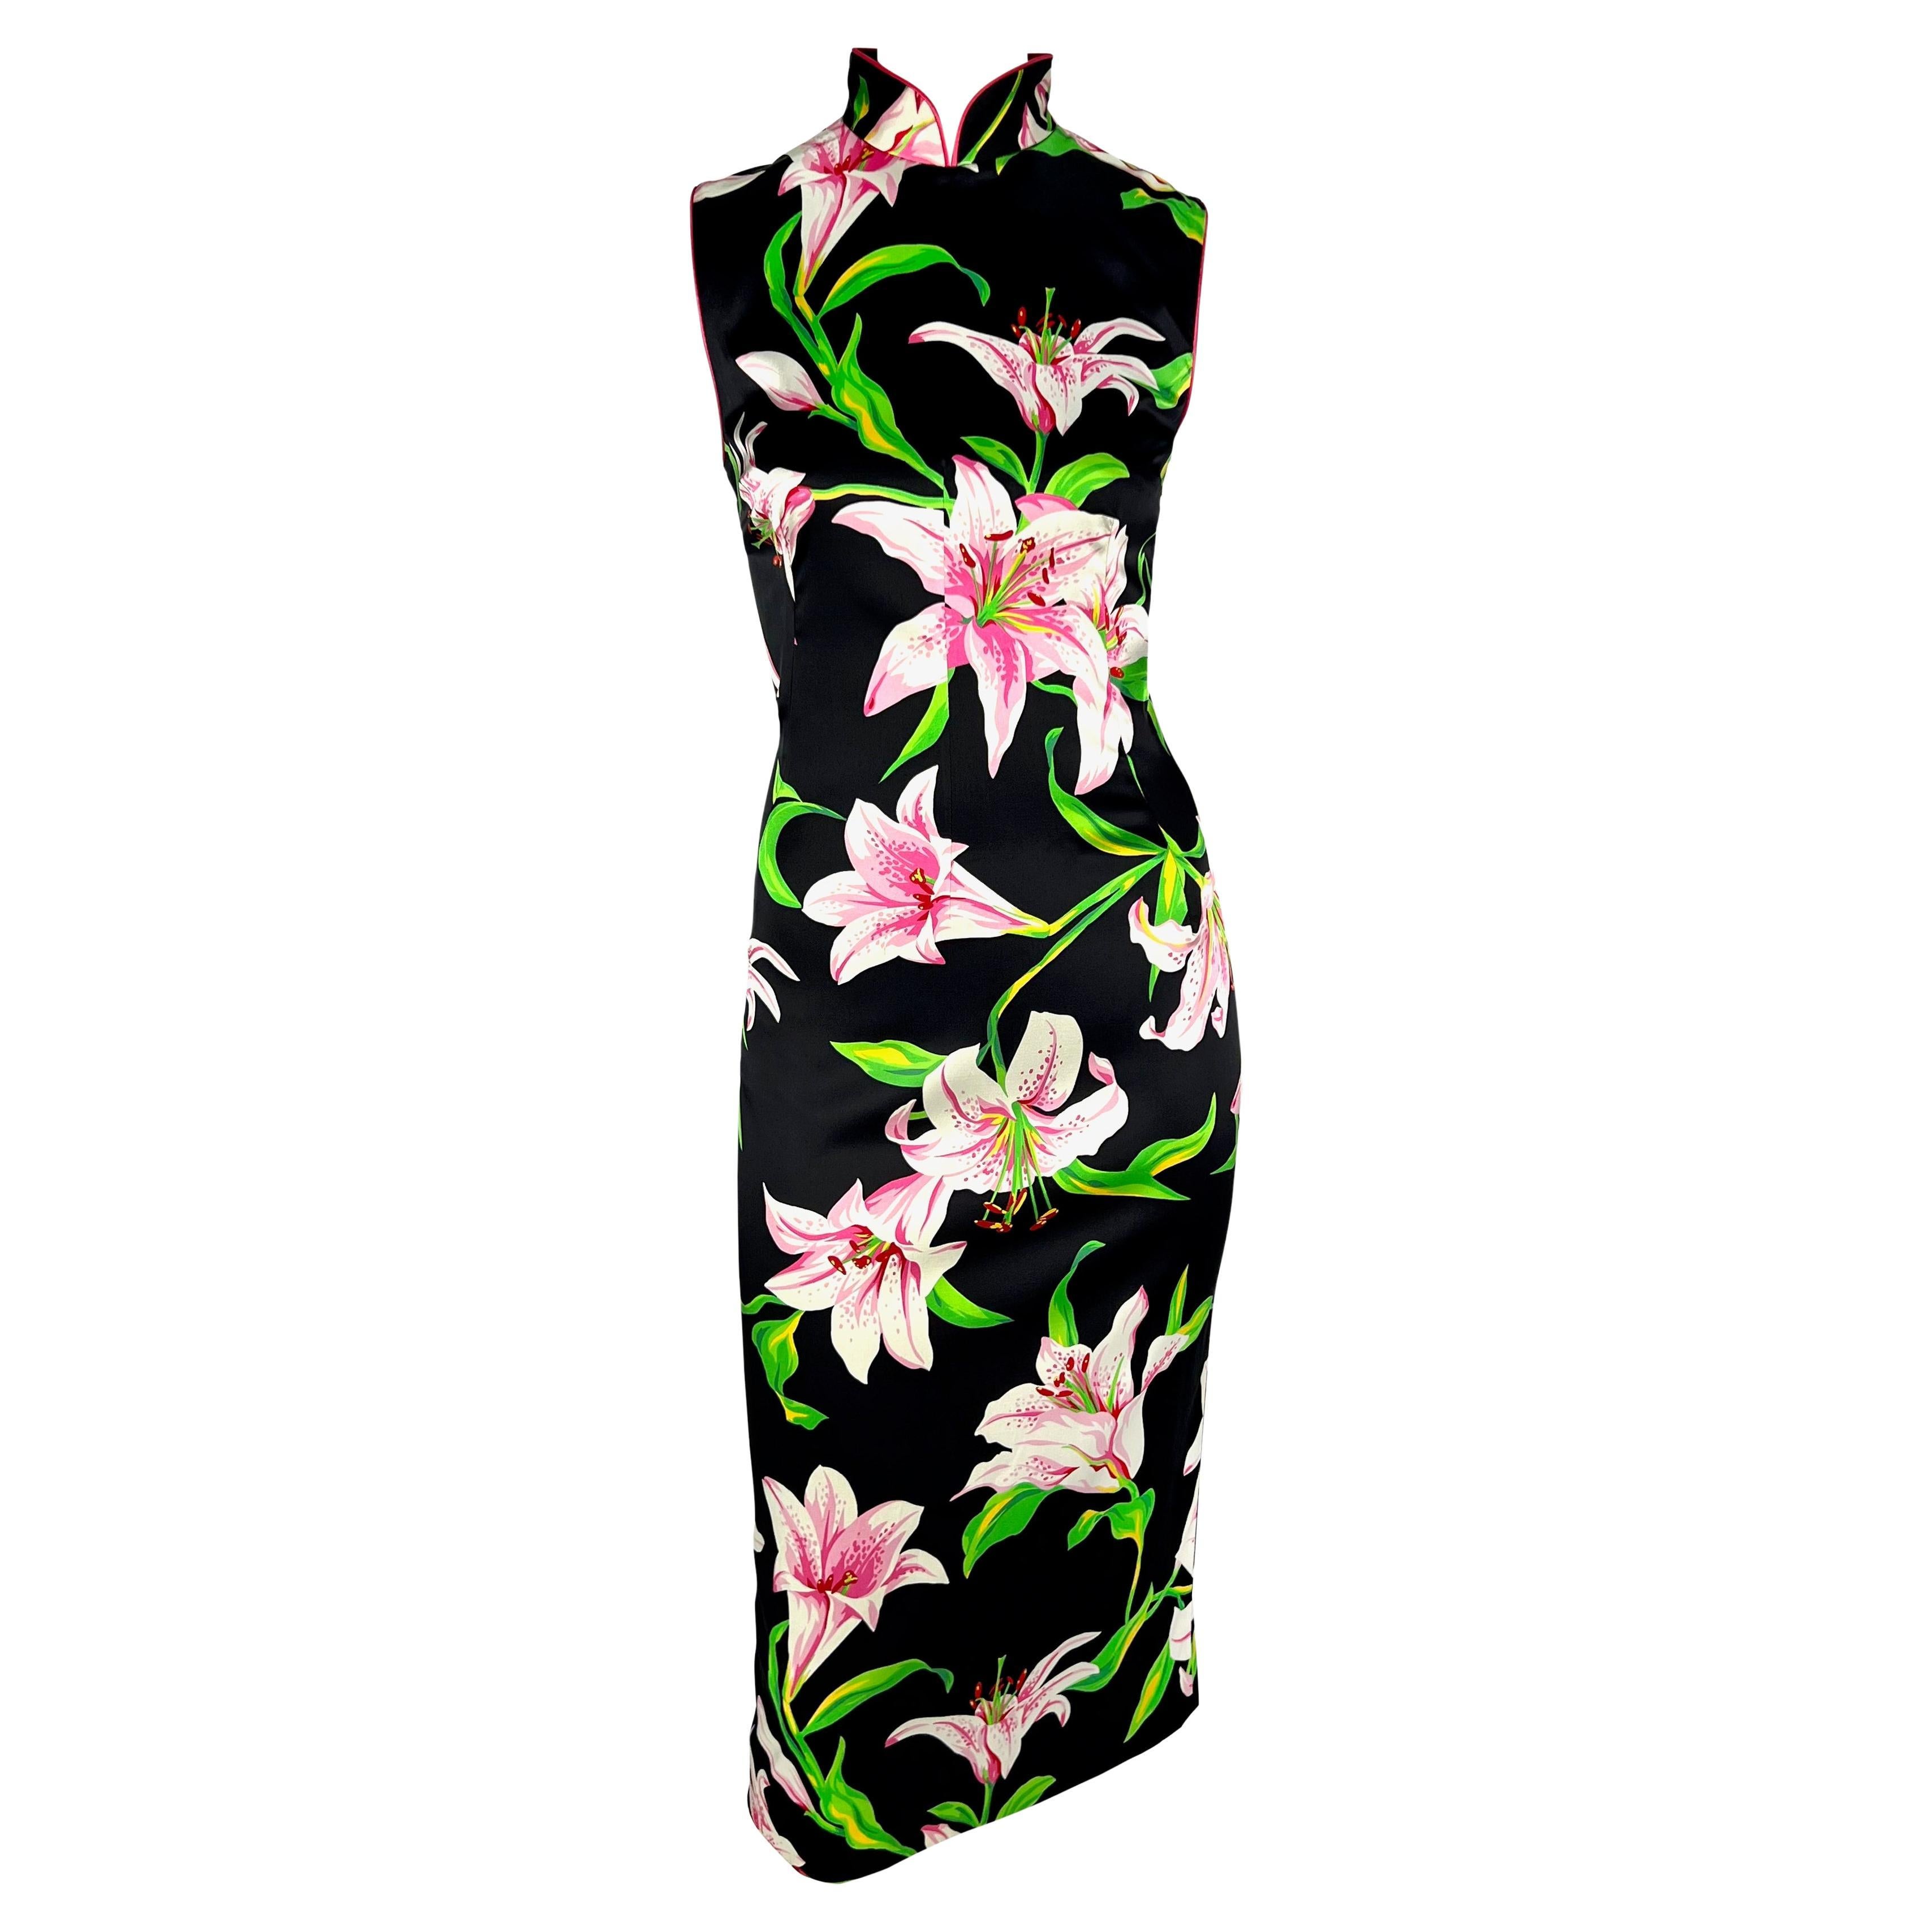 S/S 2001 Dolce & Gabbana Black Pink Lilly Print Bodycon Satin Sleeveless Dress For Sale